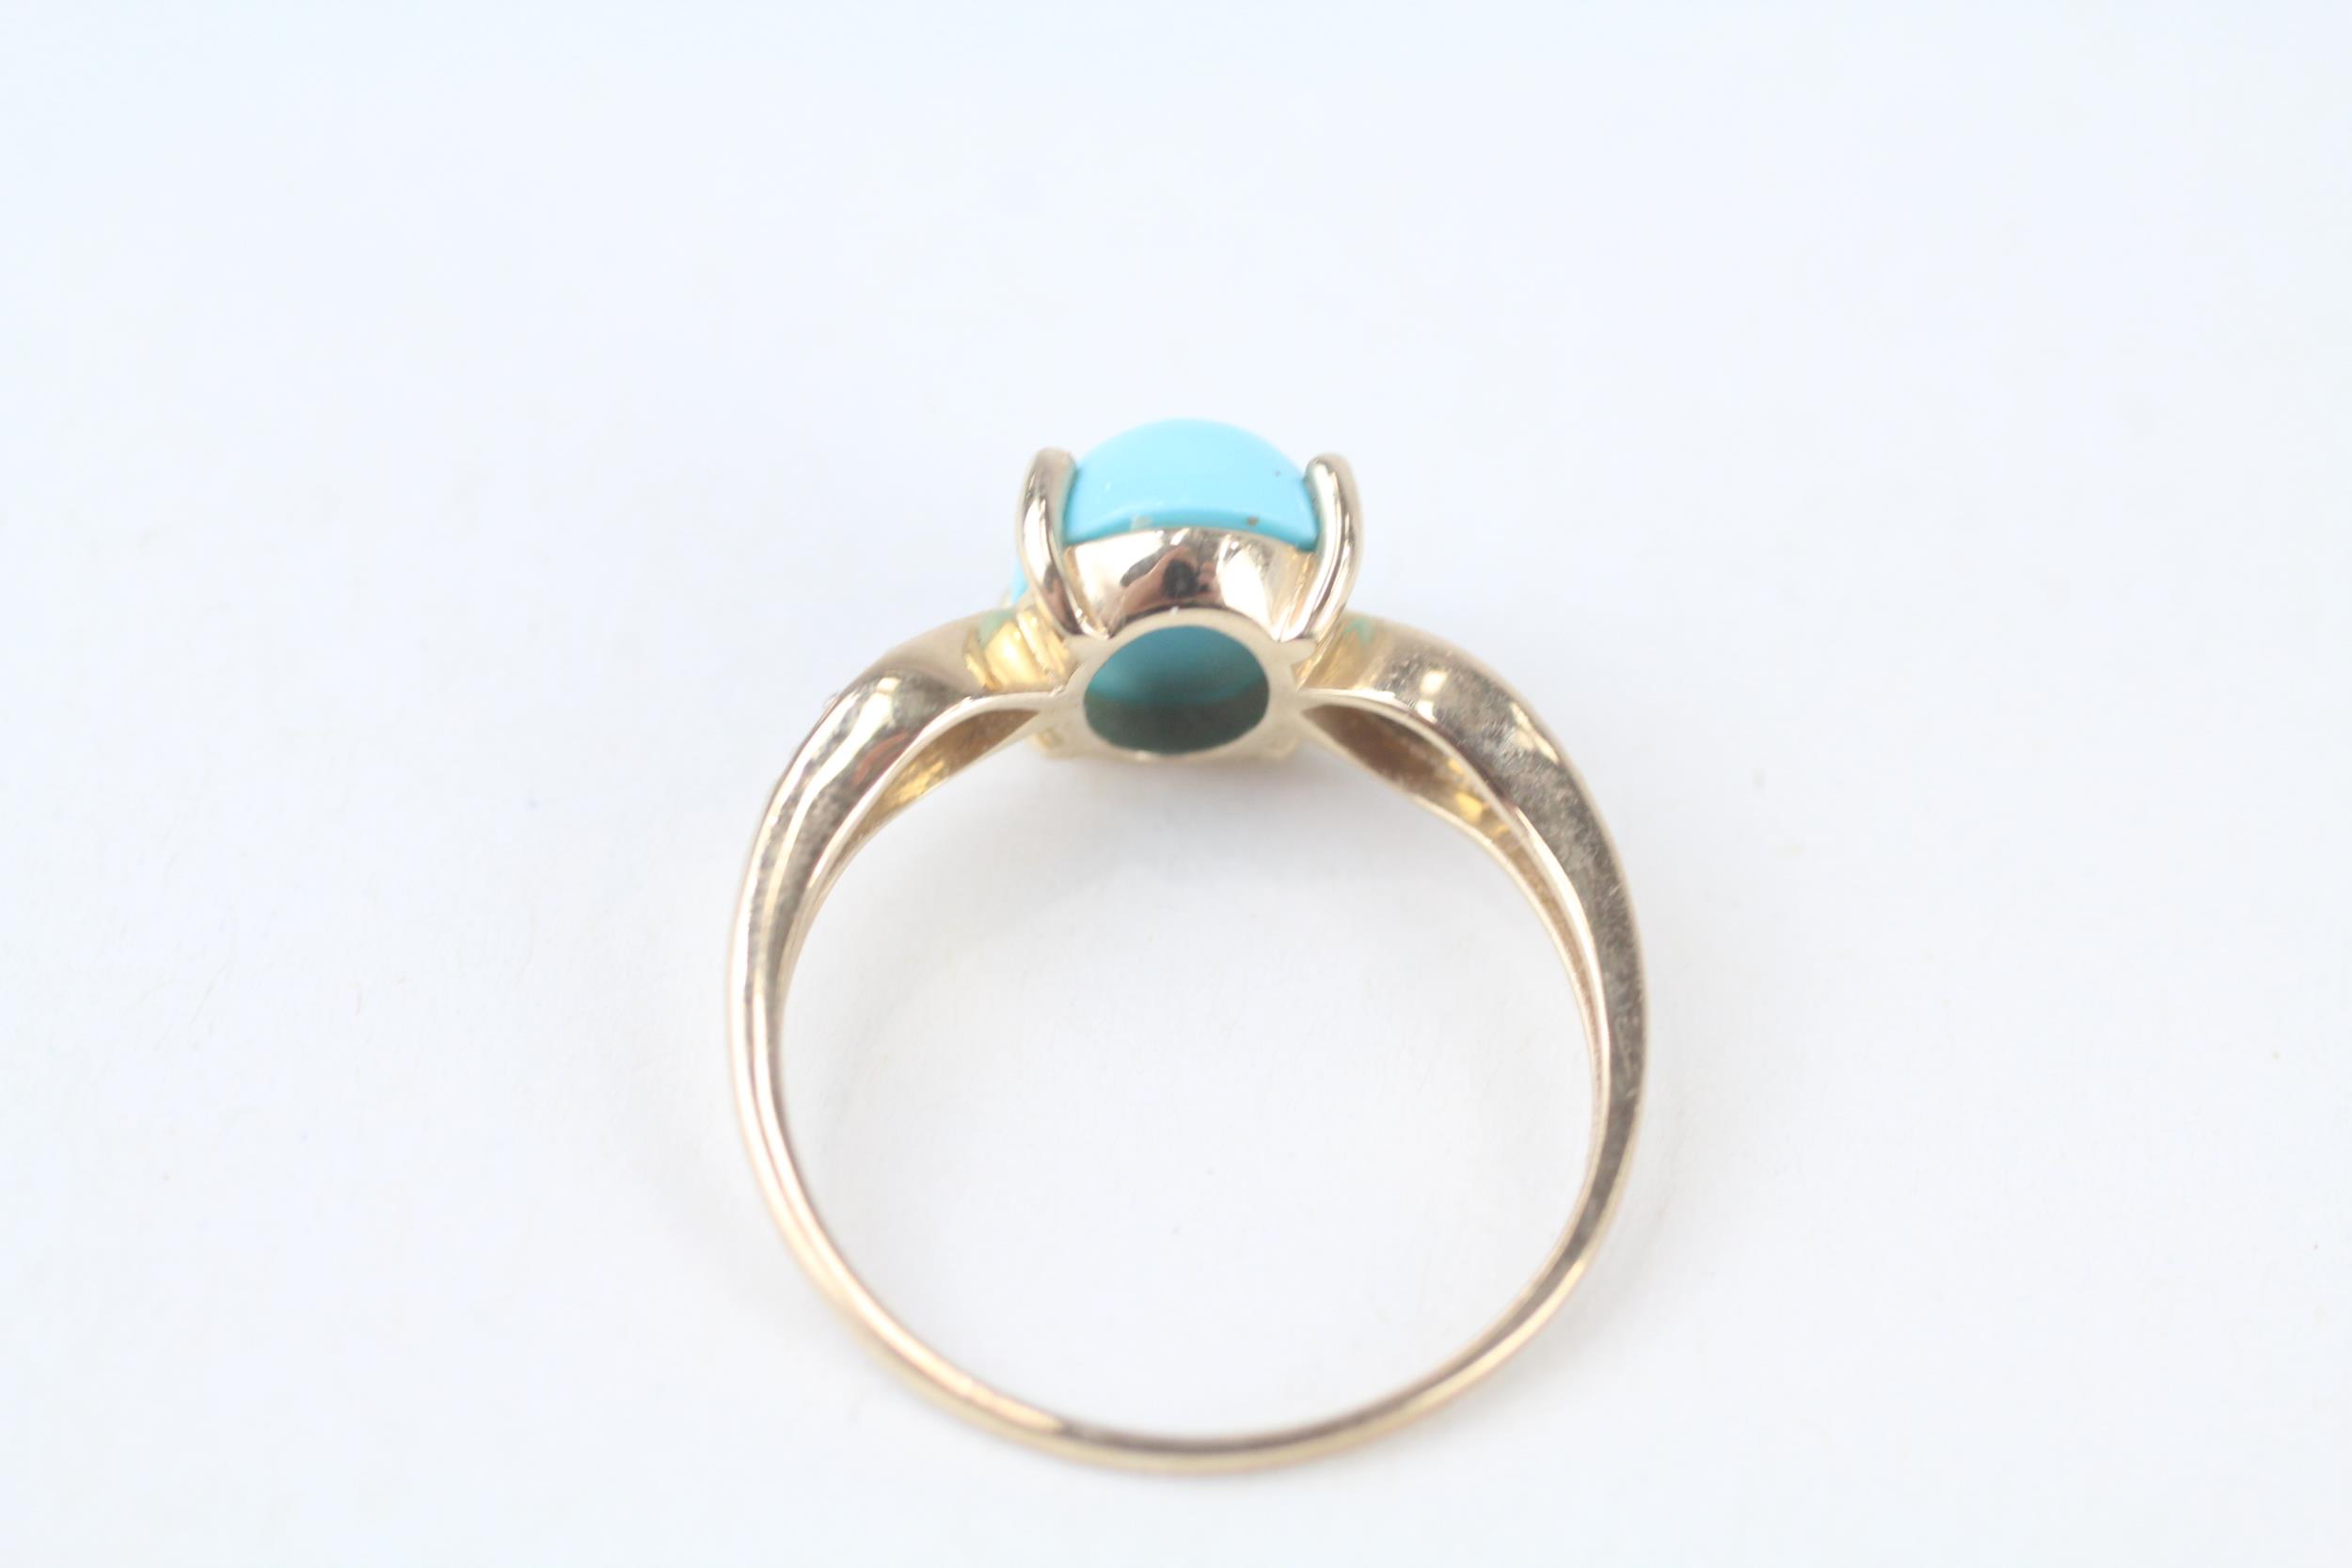 9ct gold blue gemstone single stone ring with white gemstone side Size R 1/2 2.5 g - Image 5 of 5